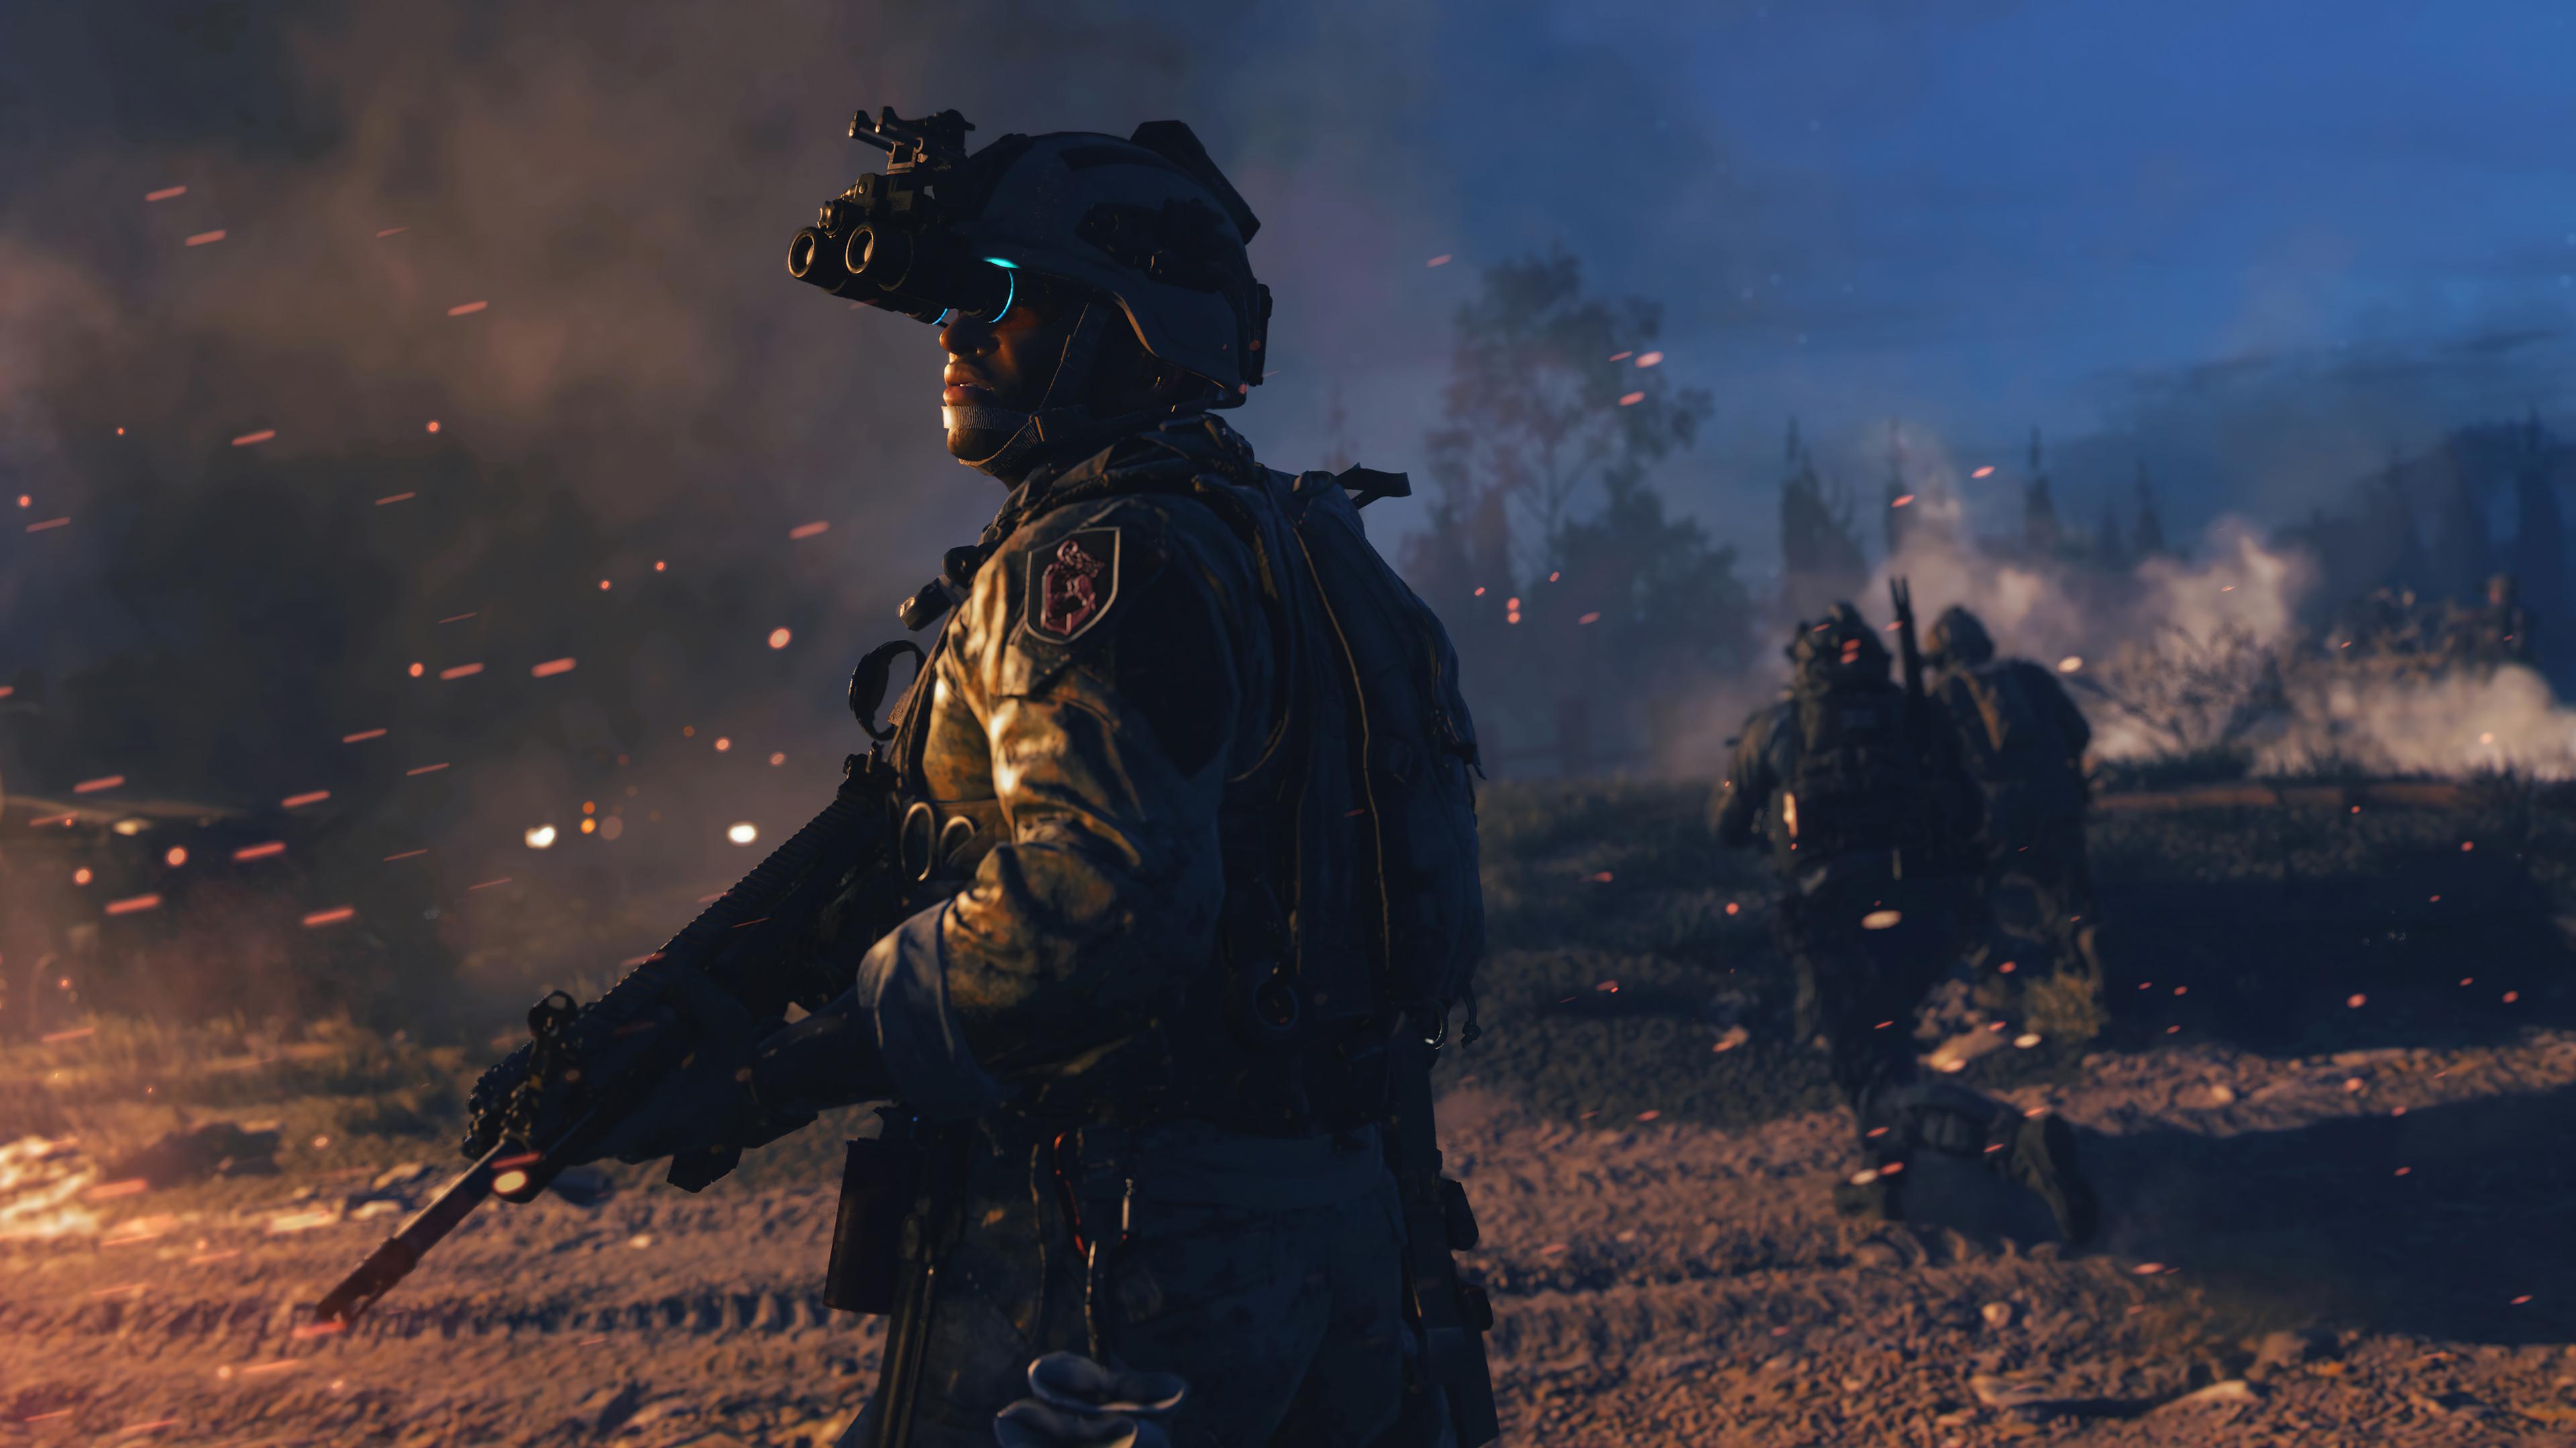 56+] Call of Duty Modern Warfare 2022 Wallpapers - WallpaperSafari